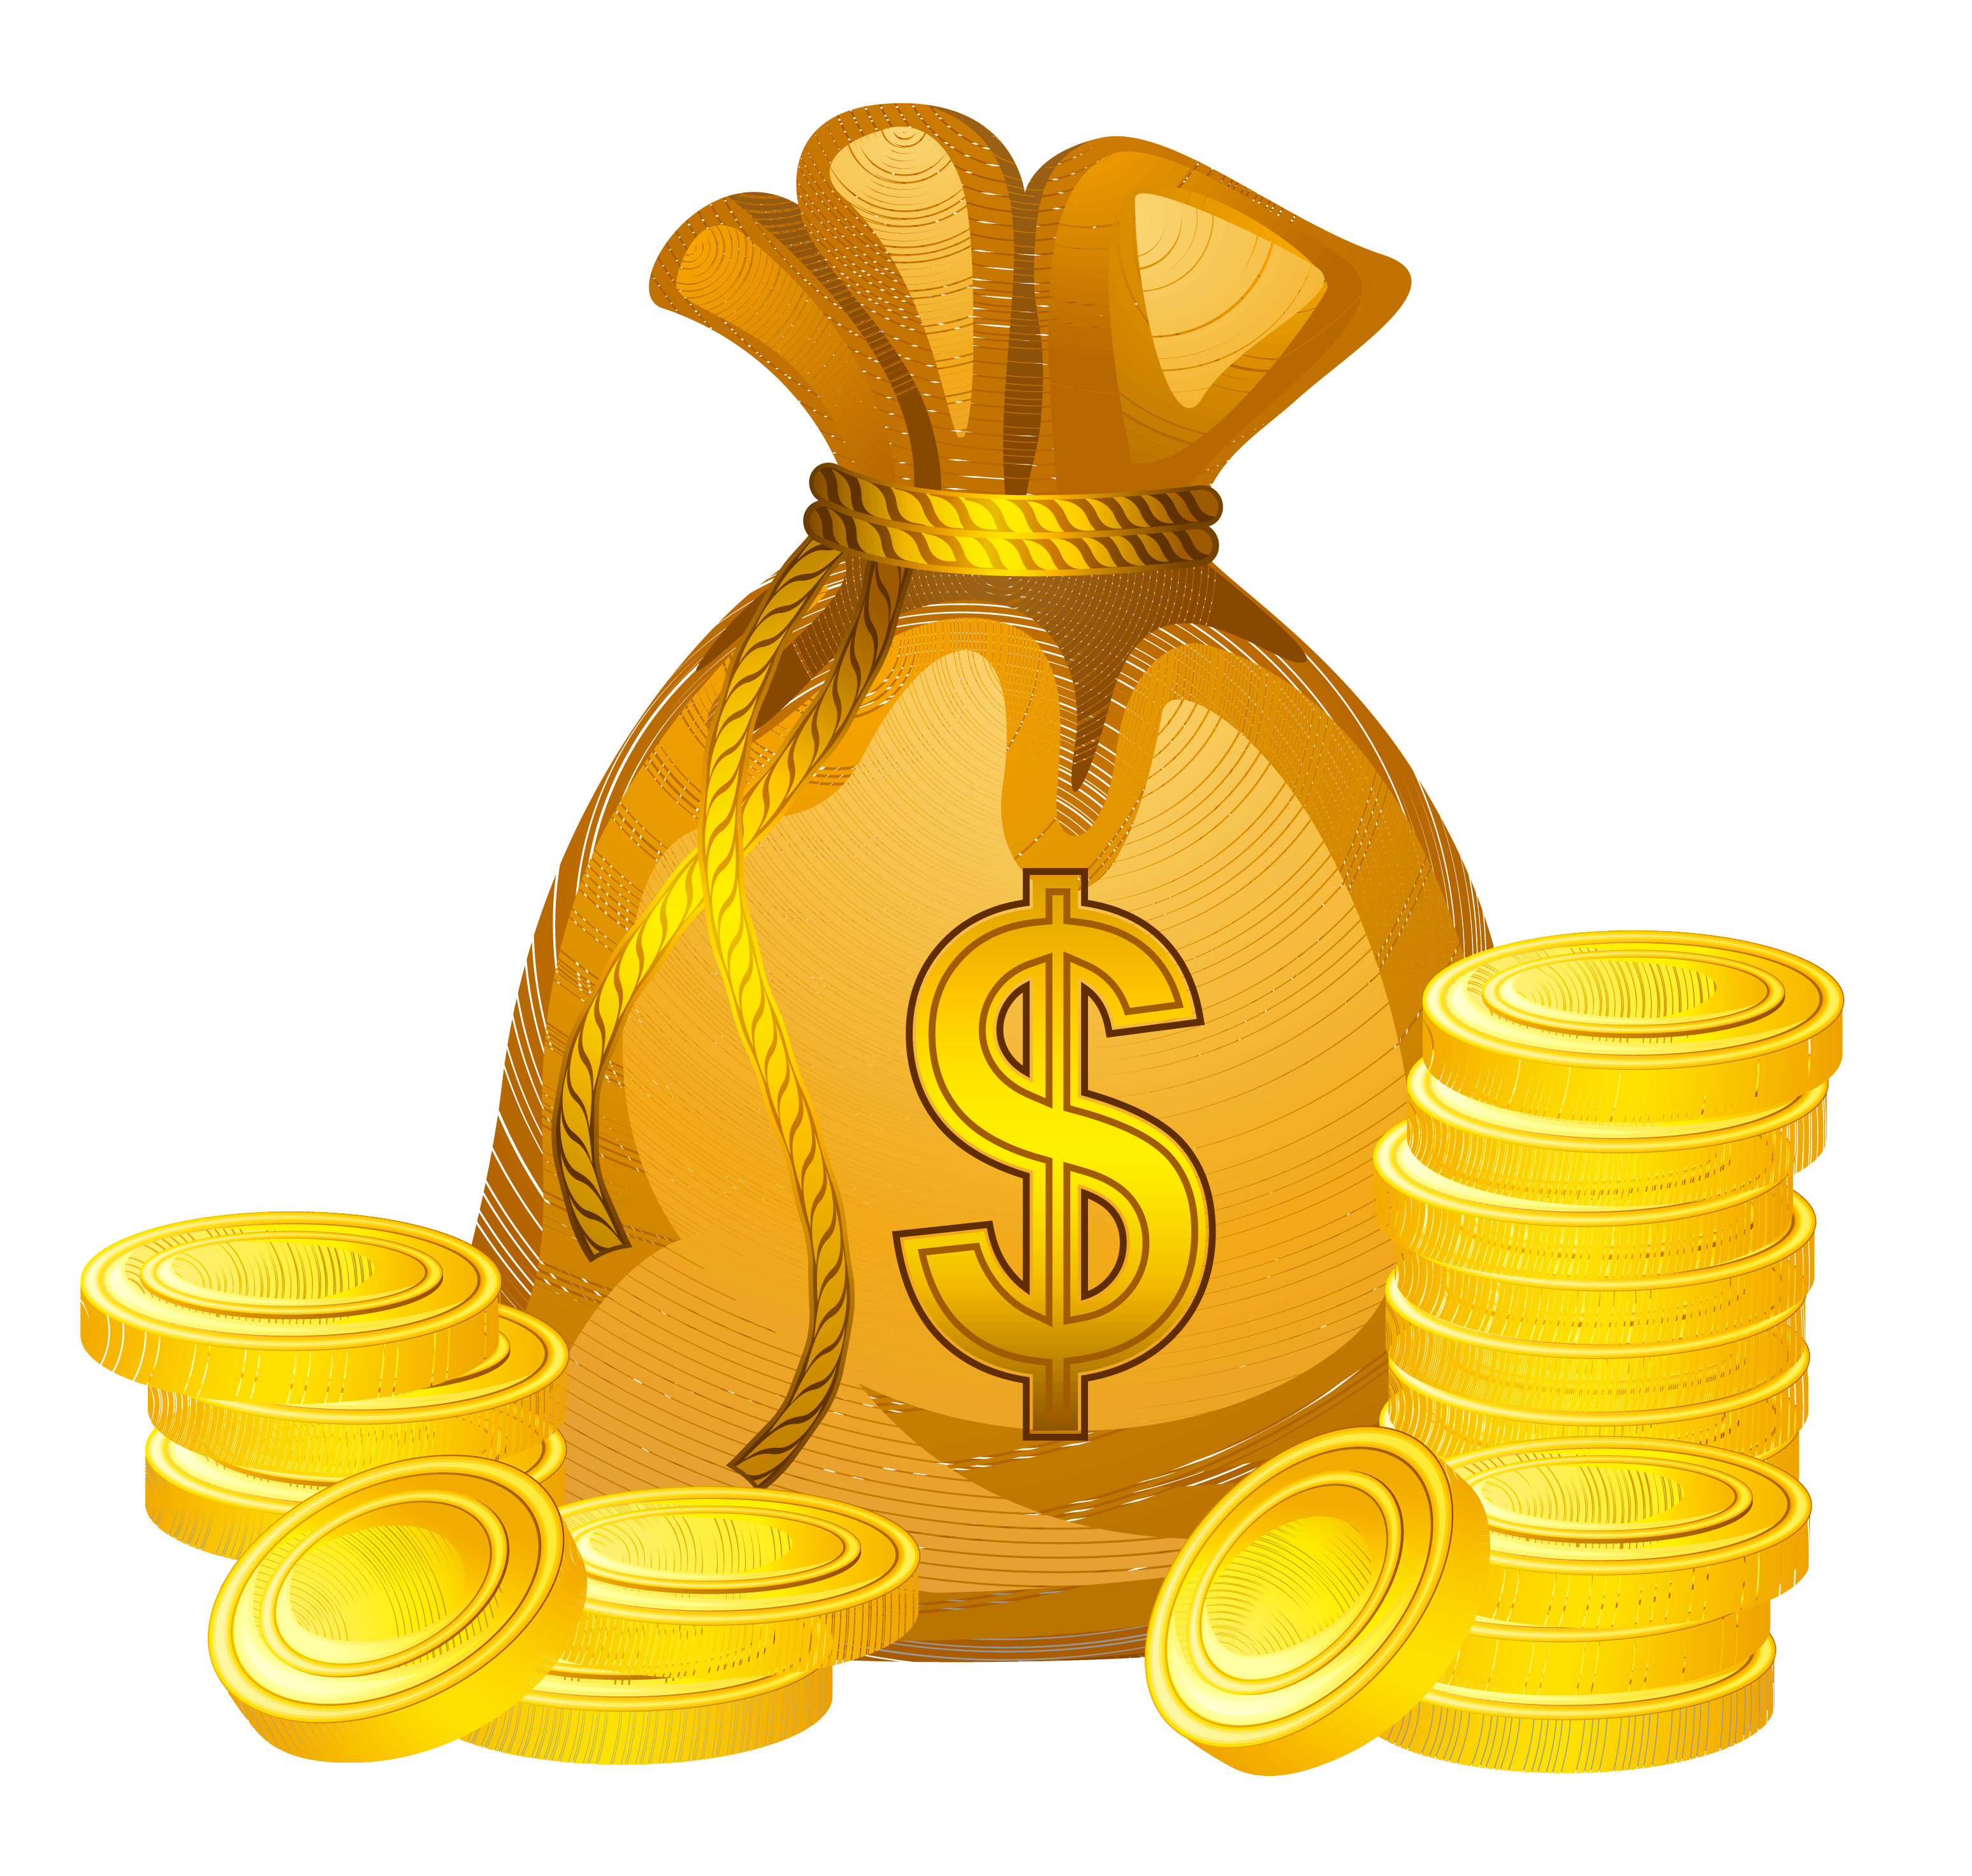 Bag Full Of Money PNG Transparent Images Free Download